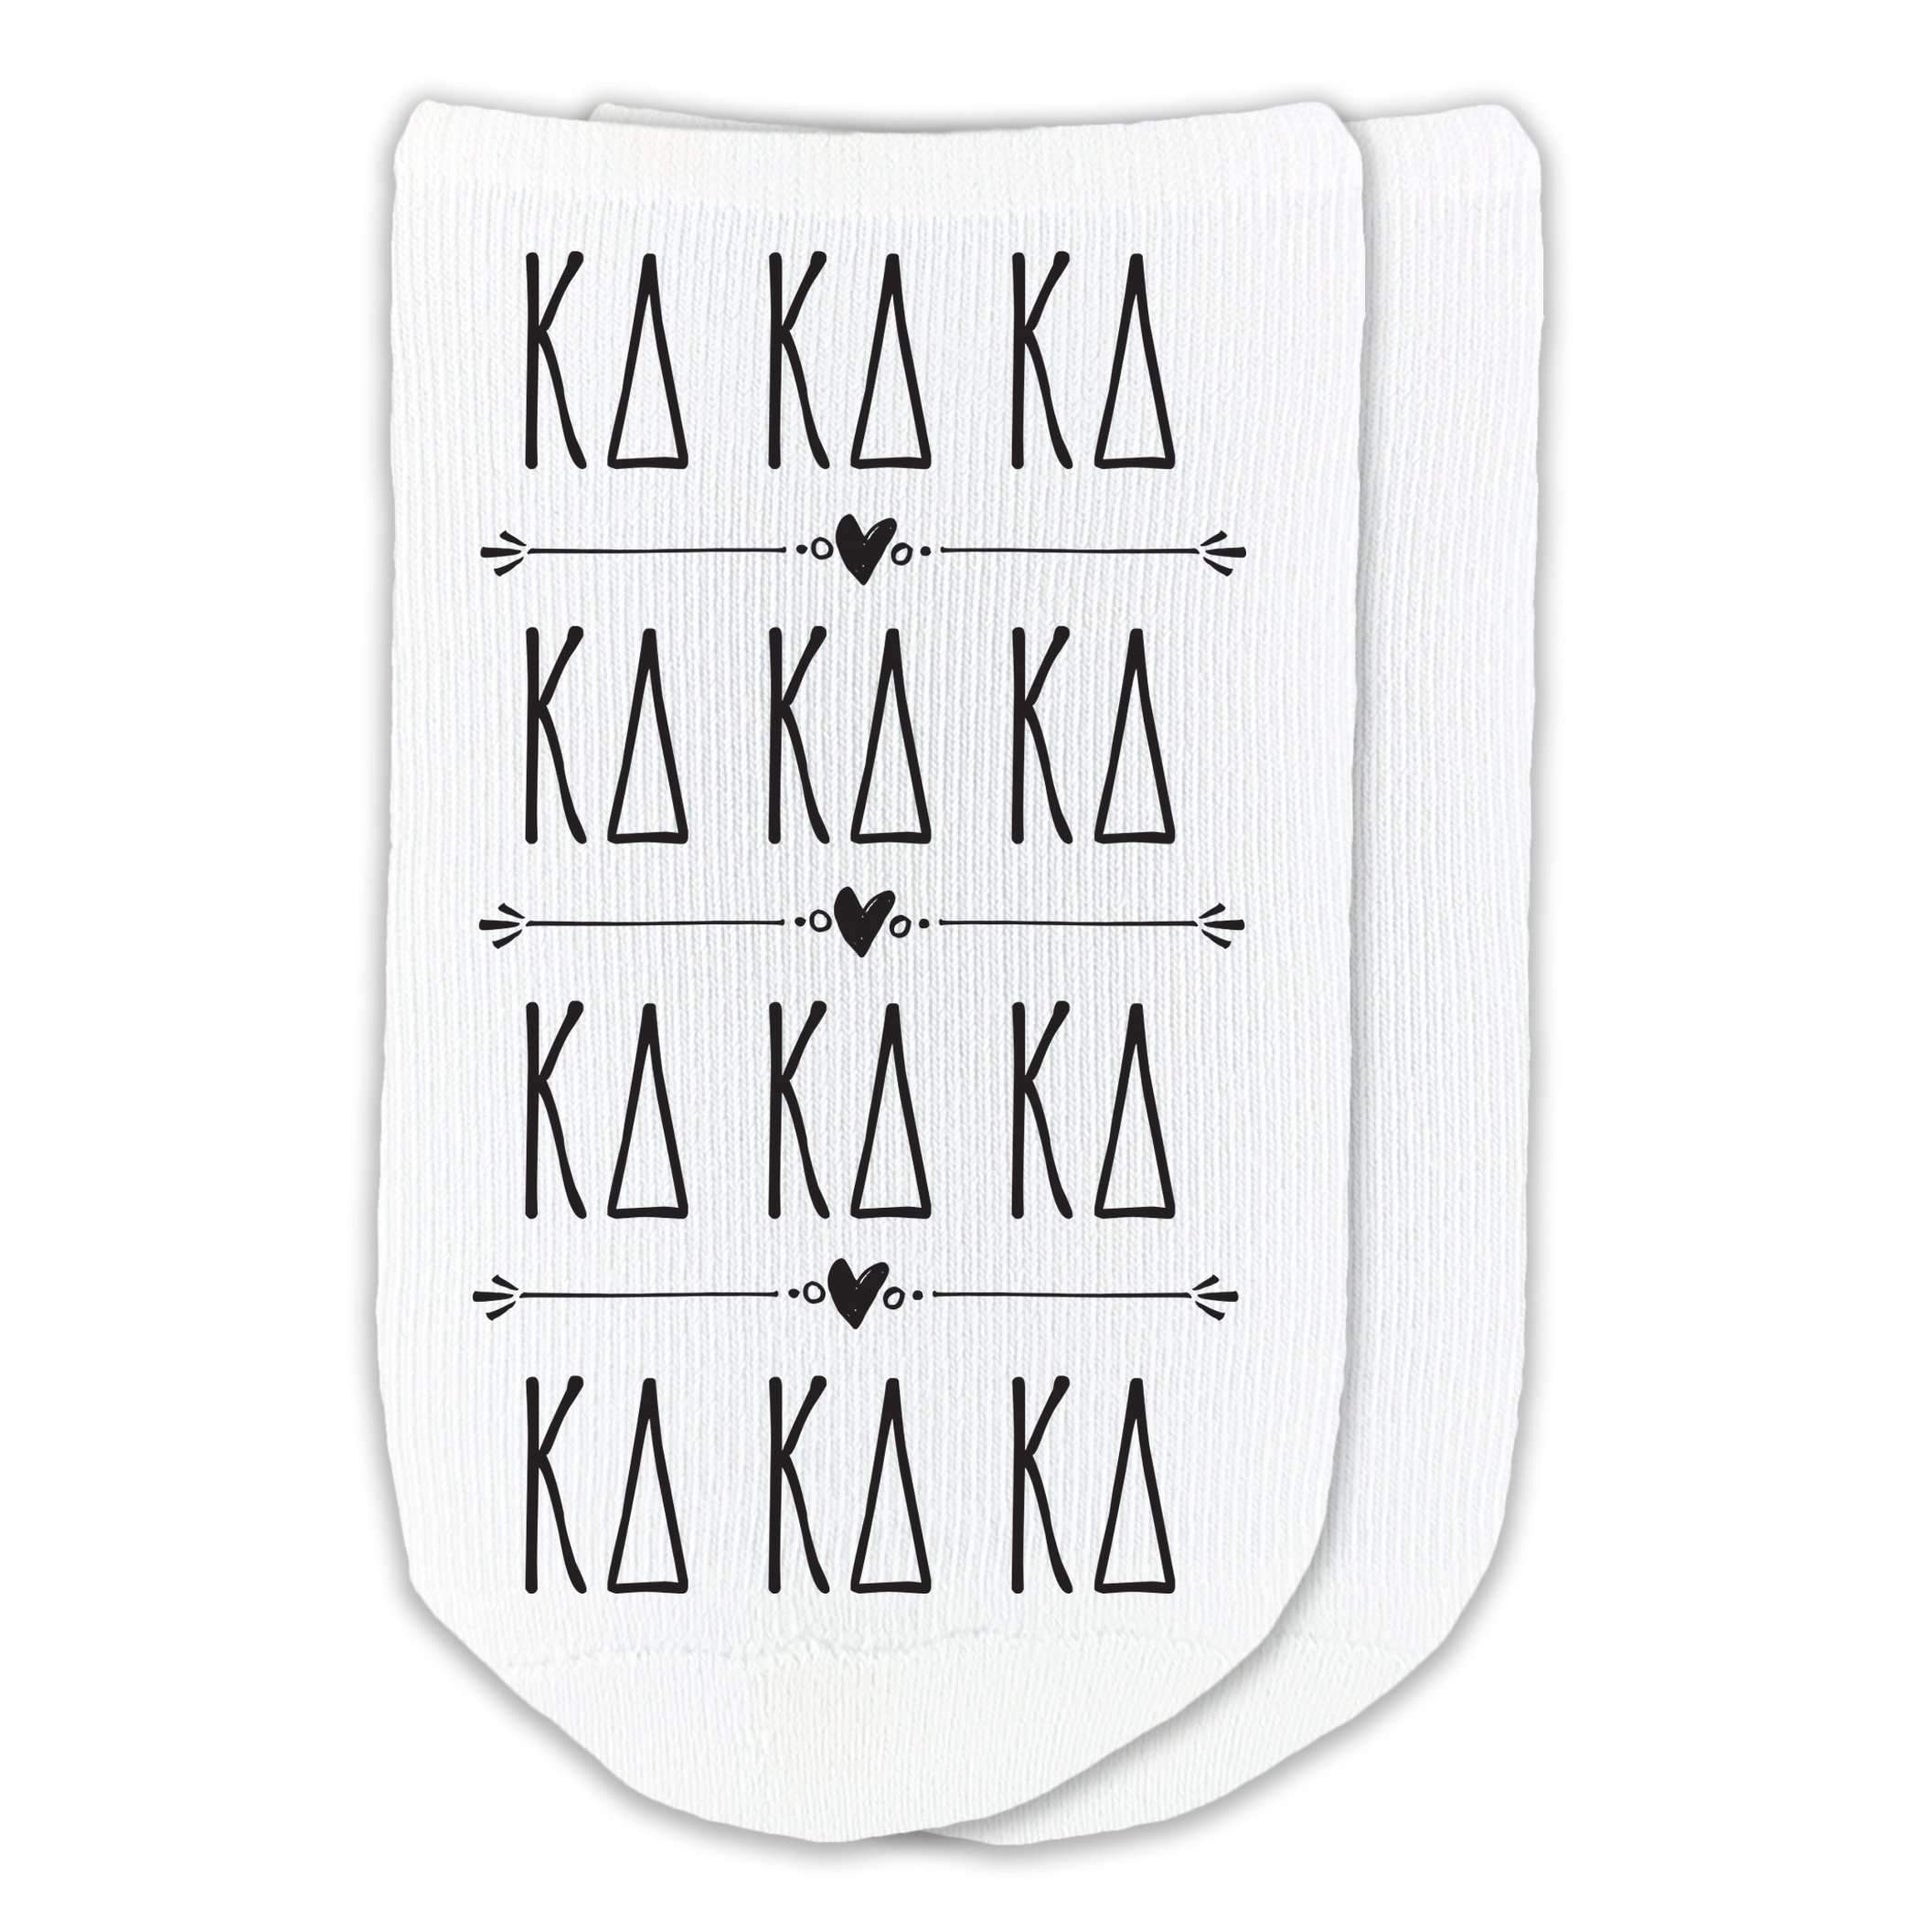 Kappa Delta sorority letters in repeat boho design custom printed on white no show socks